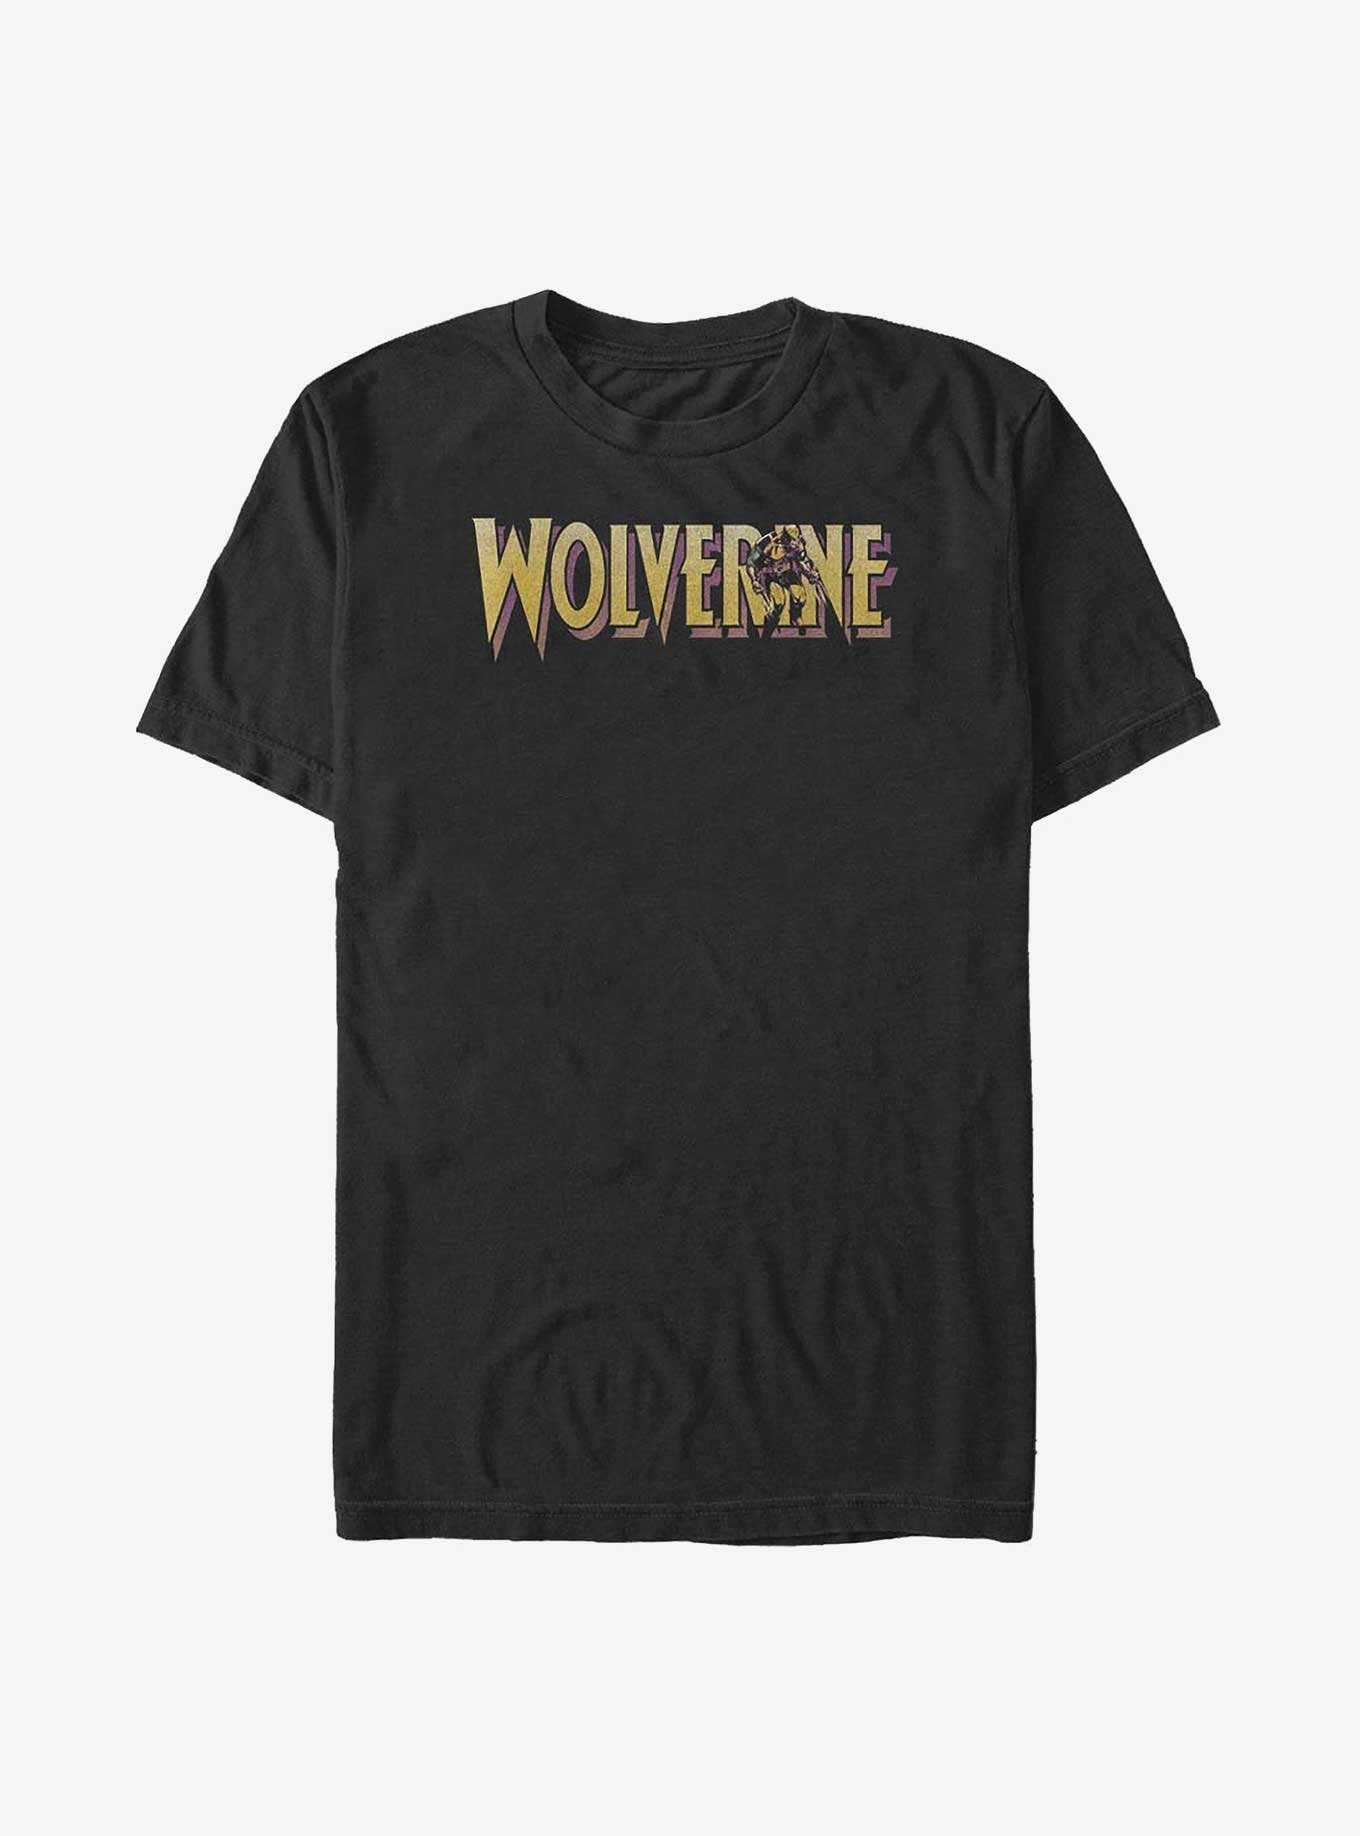 Wolverine Wolverine Logo Big & Tall T-Shirt, , hi-res